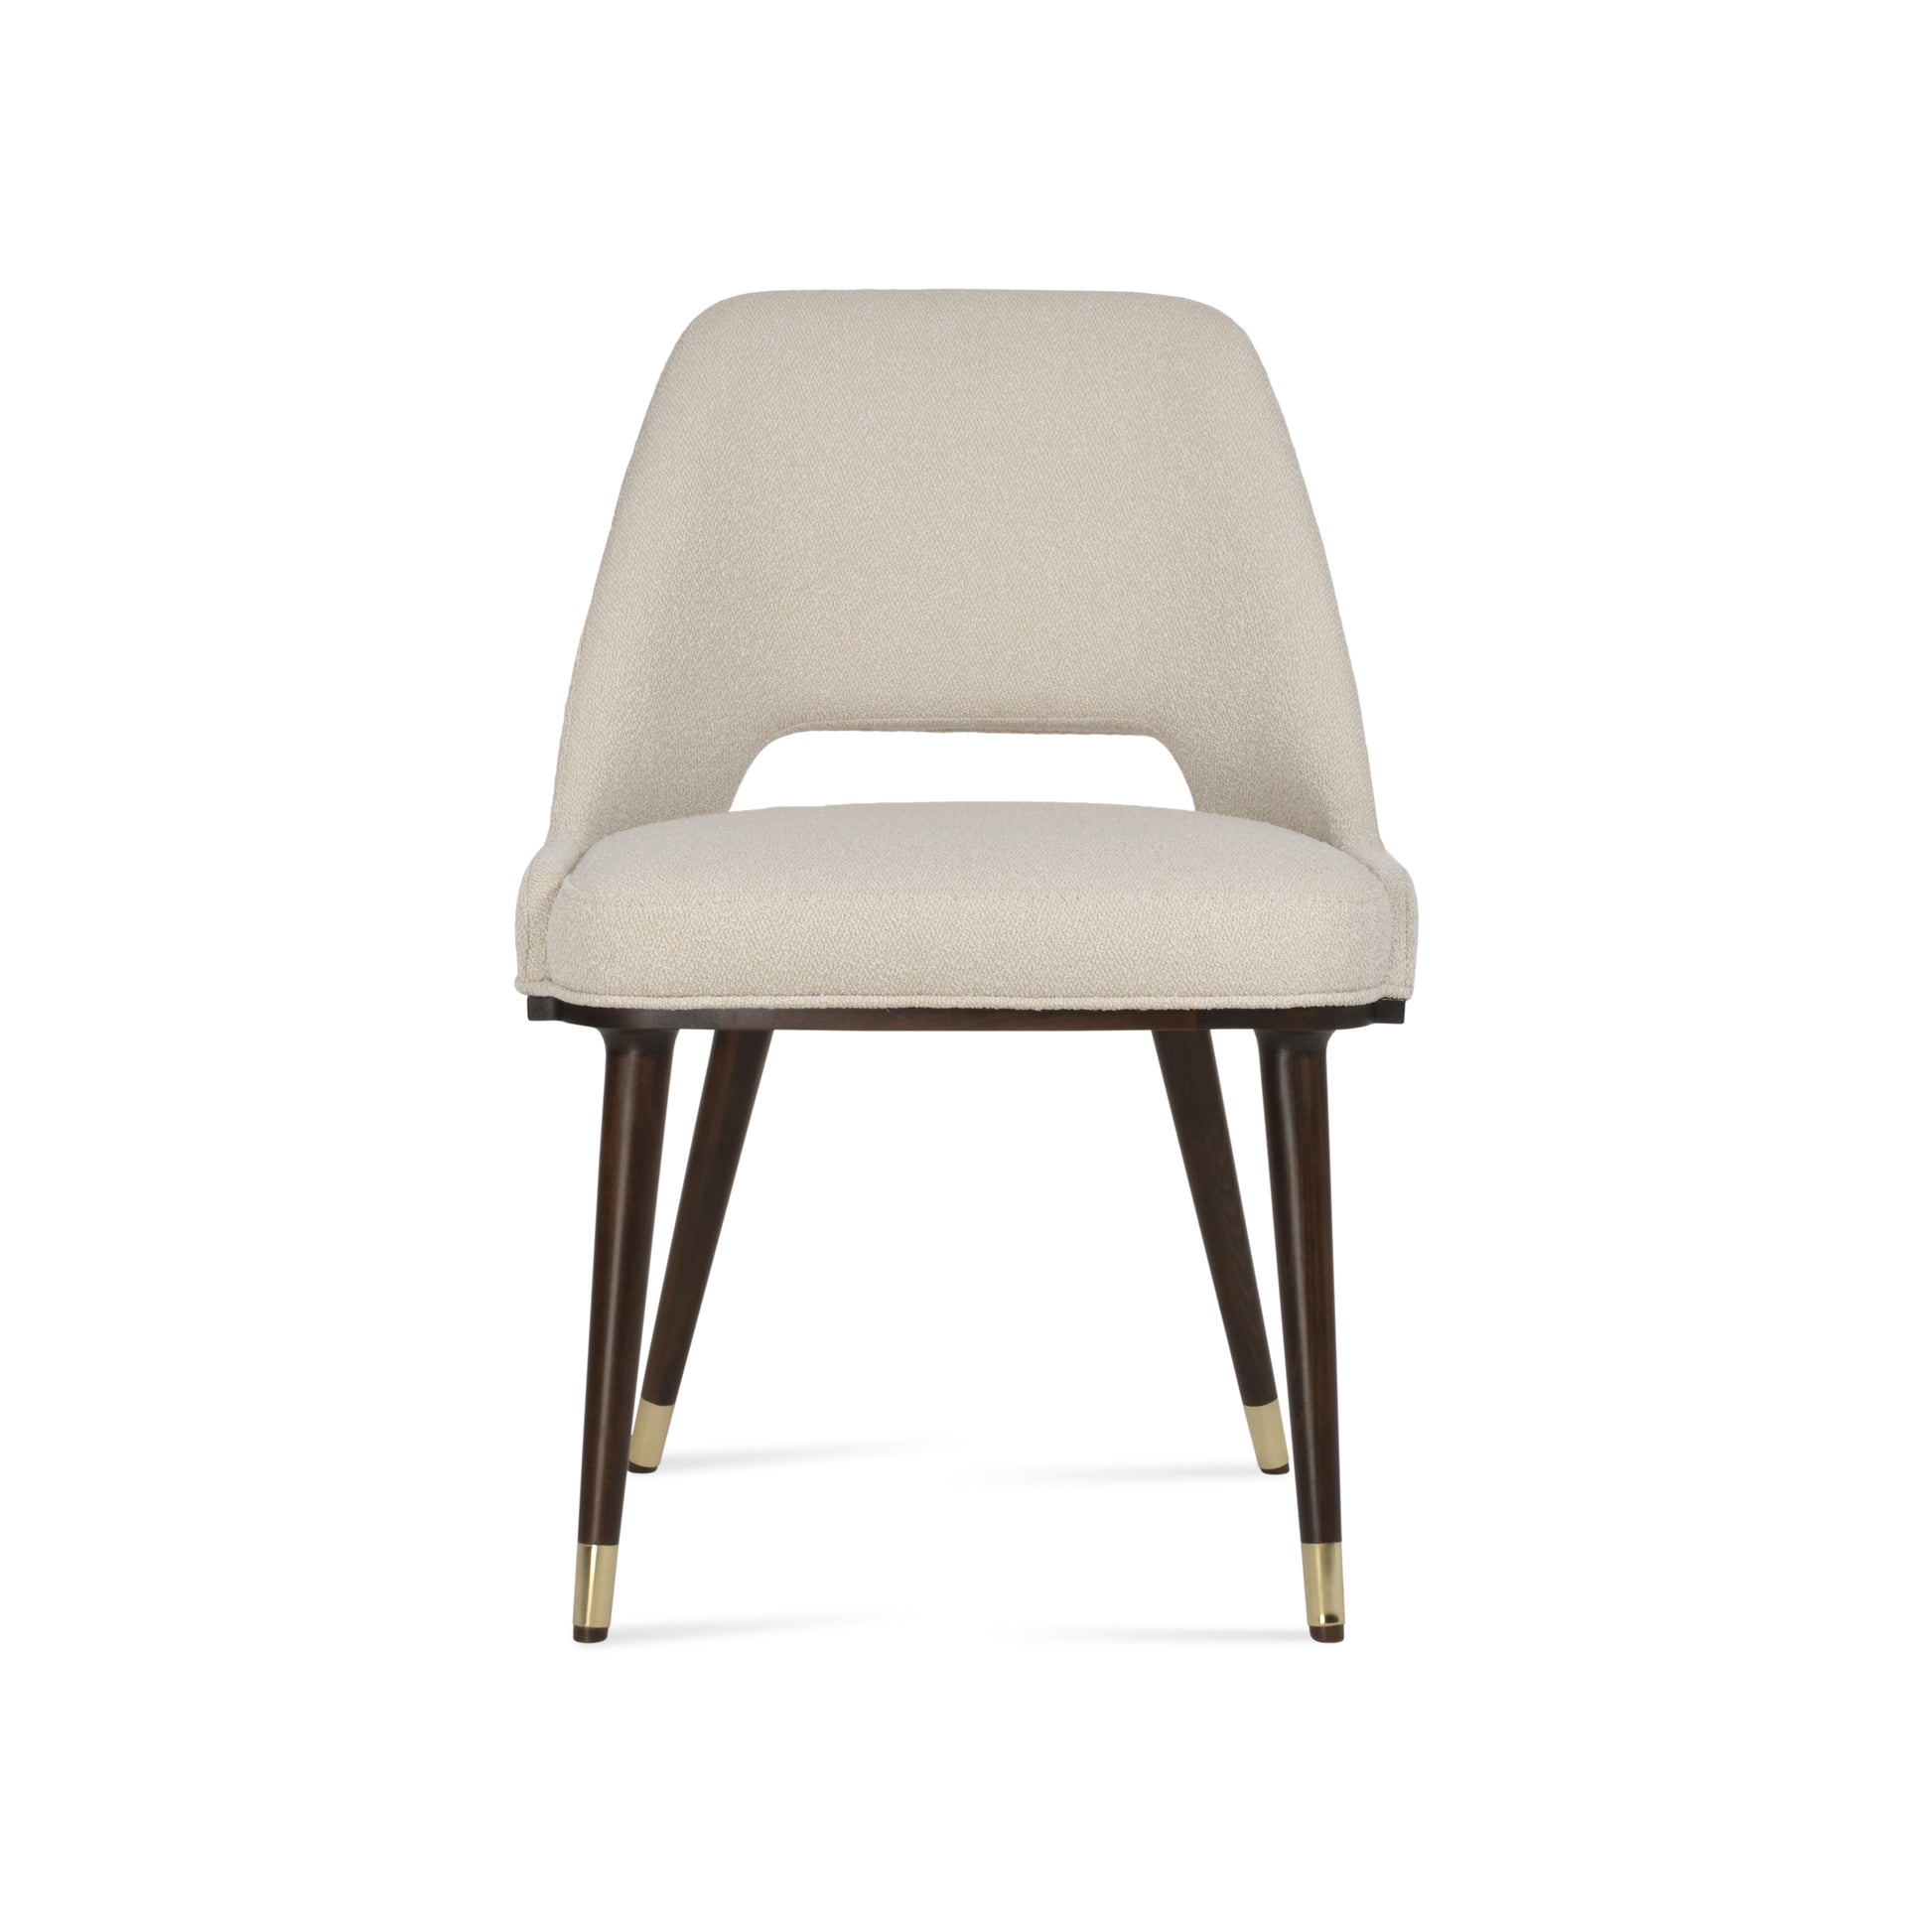 Comfortable Dining Chair - Marash Wood Upholstery Options